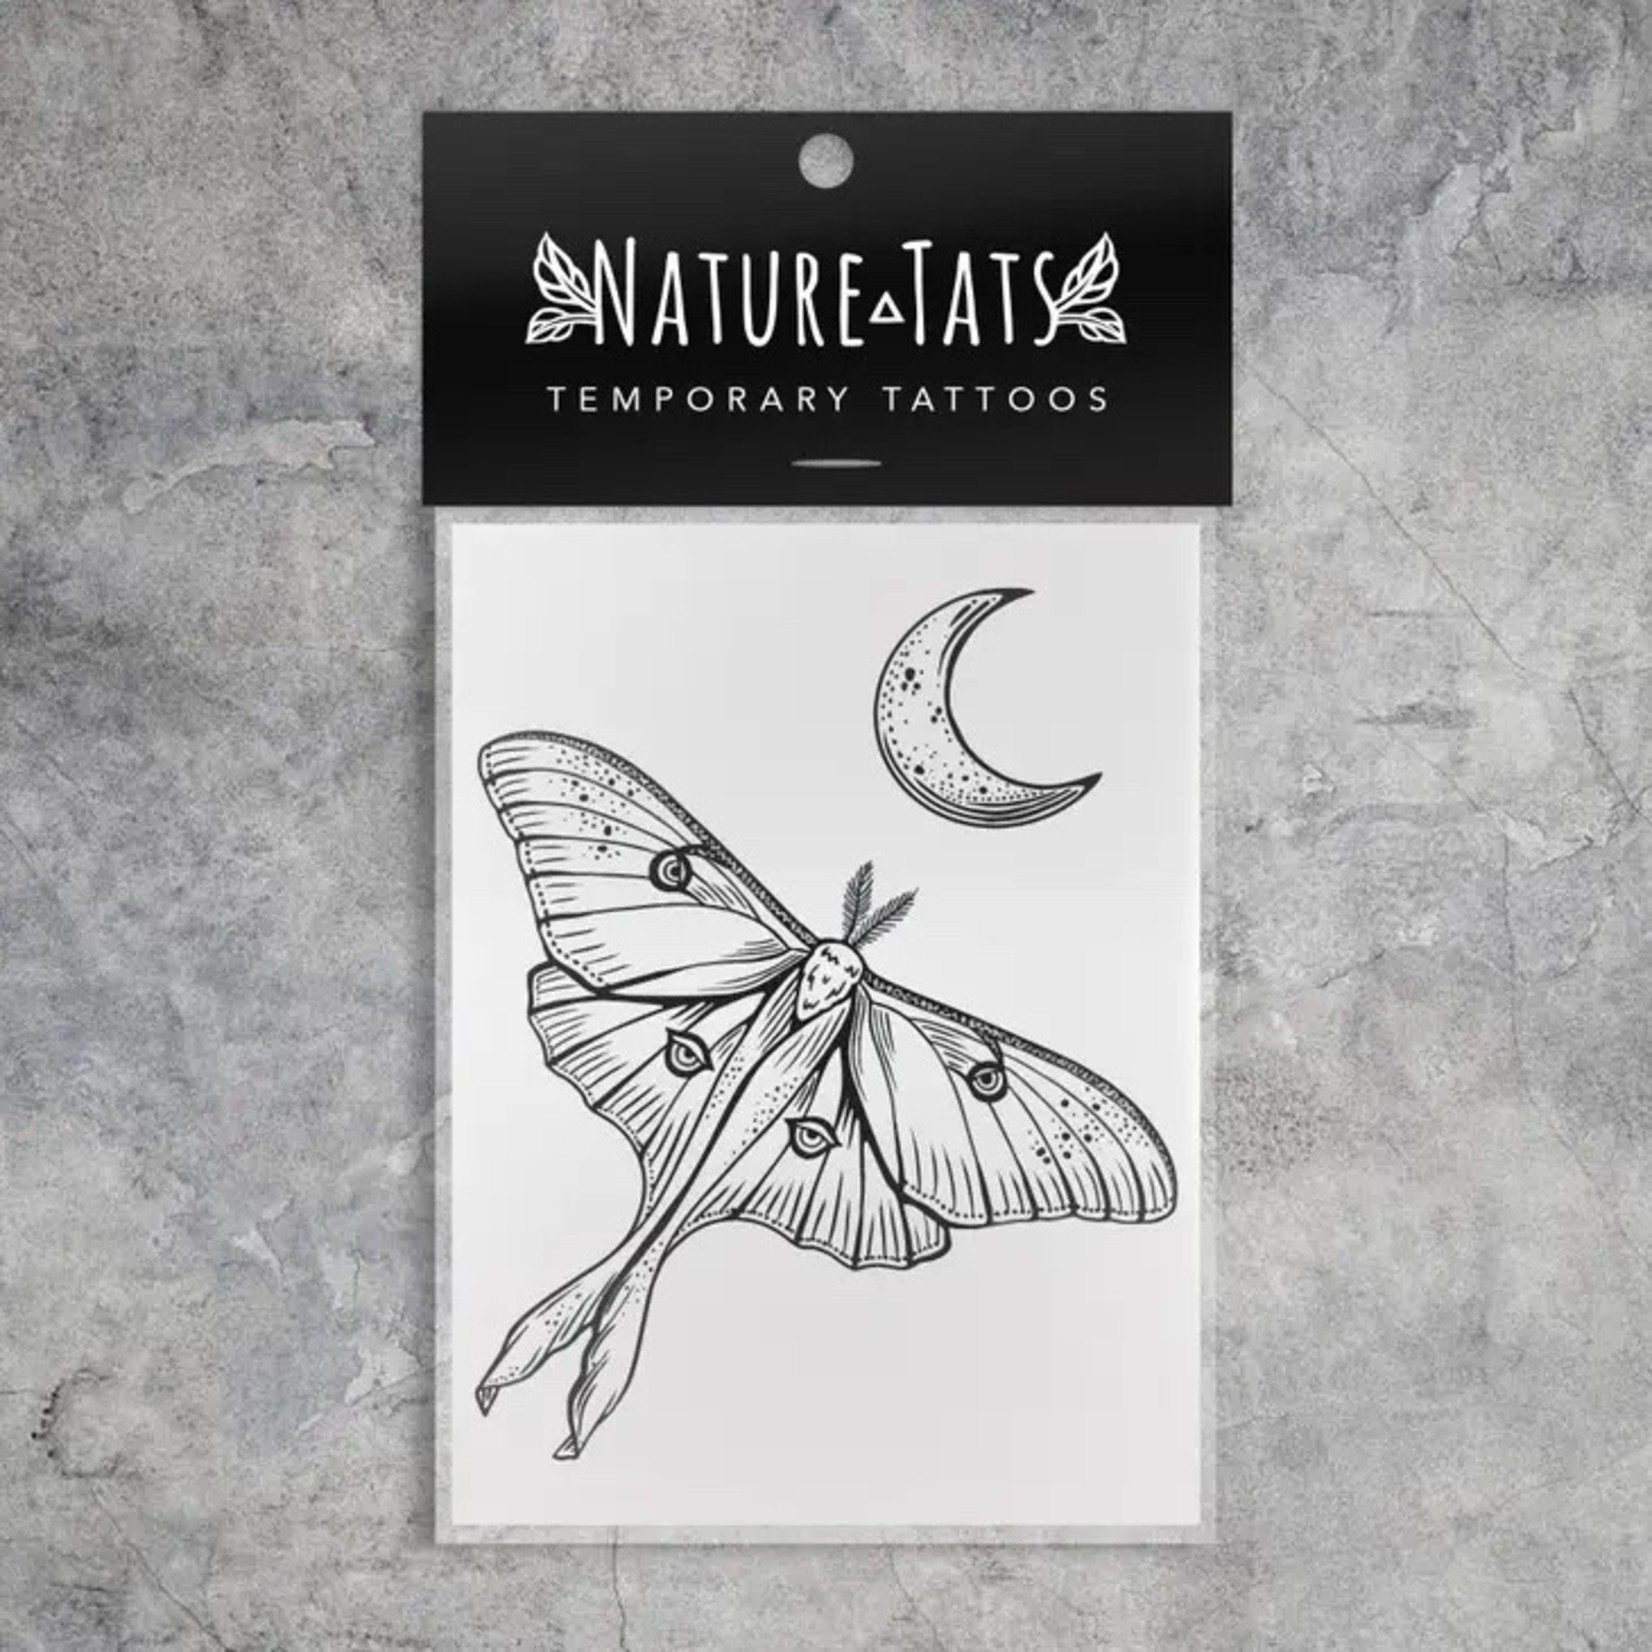 Luna Moth Fine Line tattoo  beritattoogmailcom for appointments    TikTok